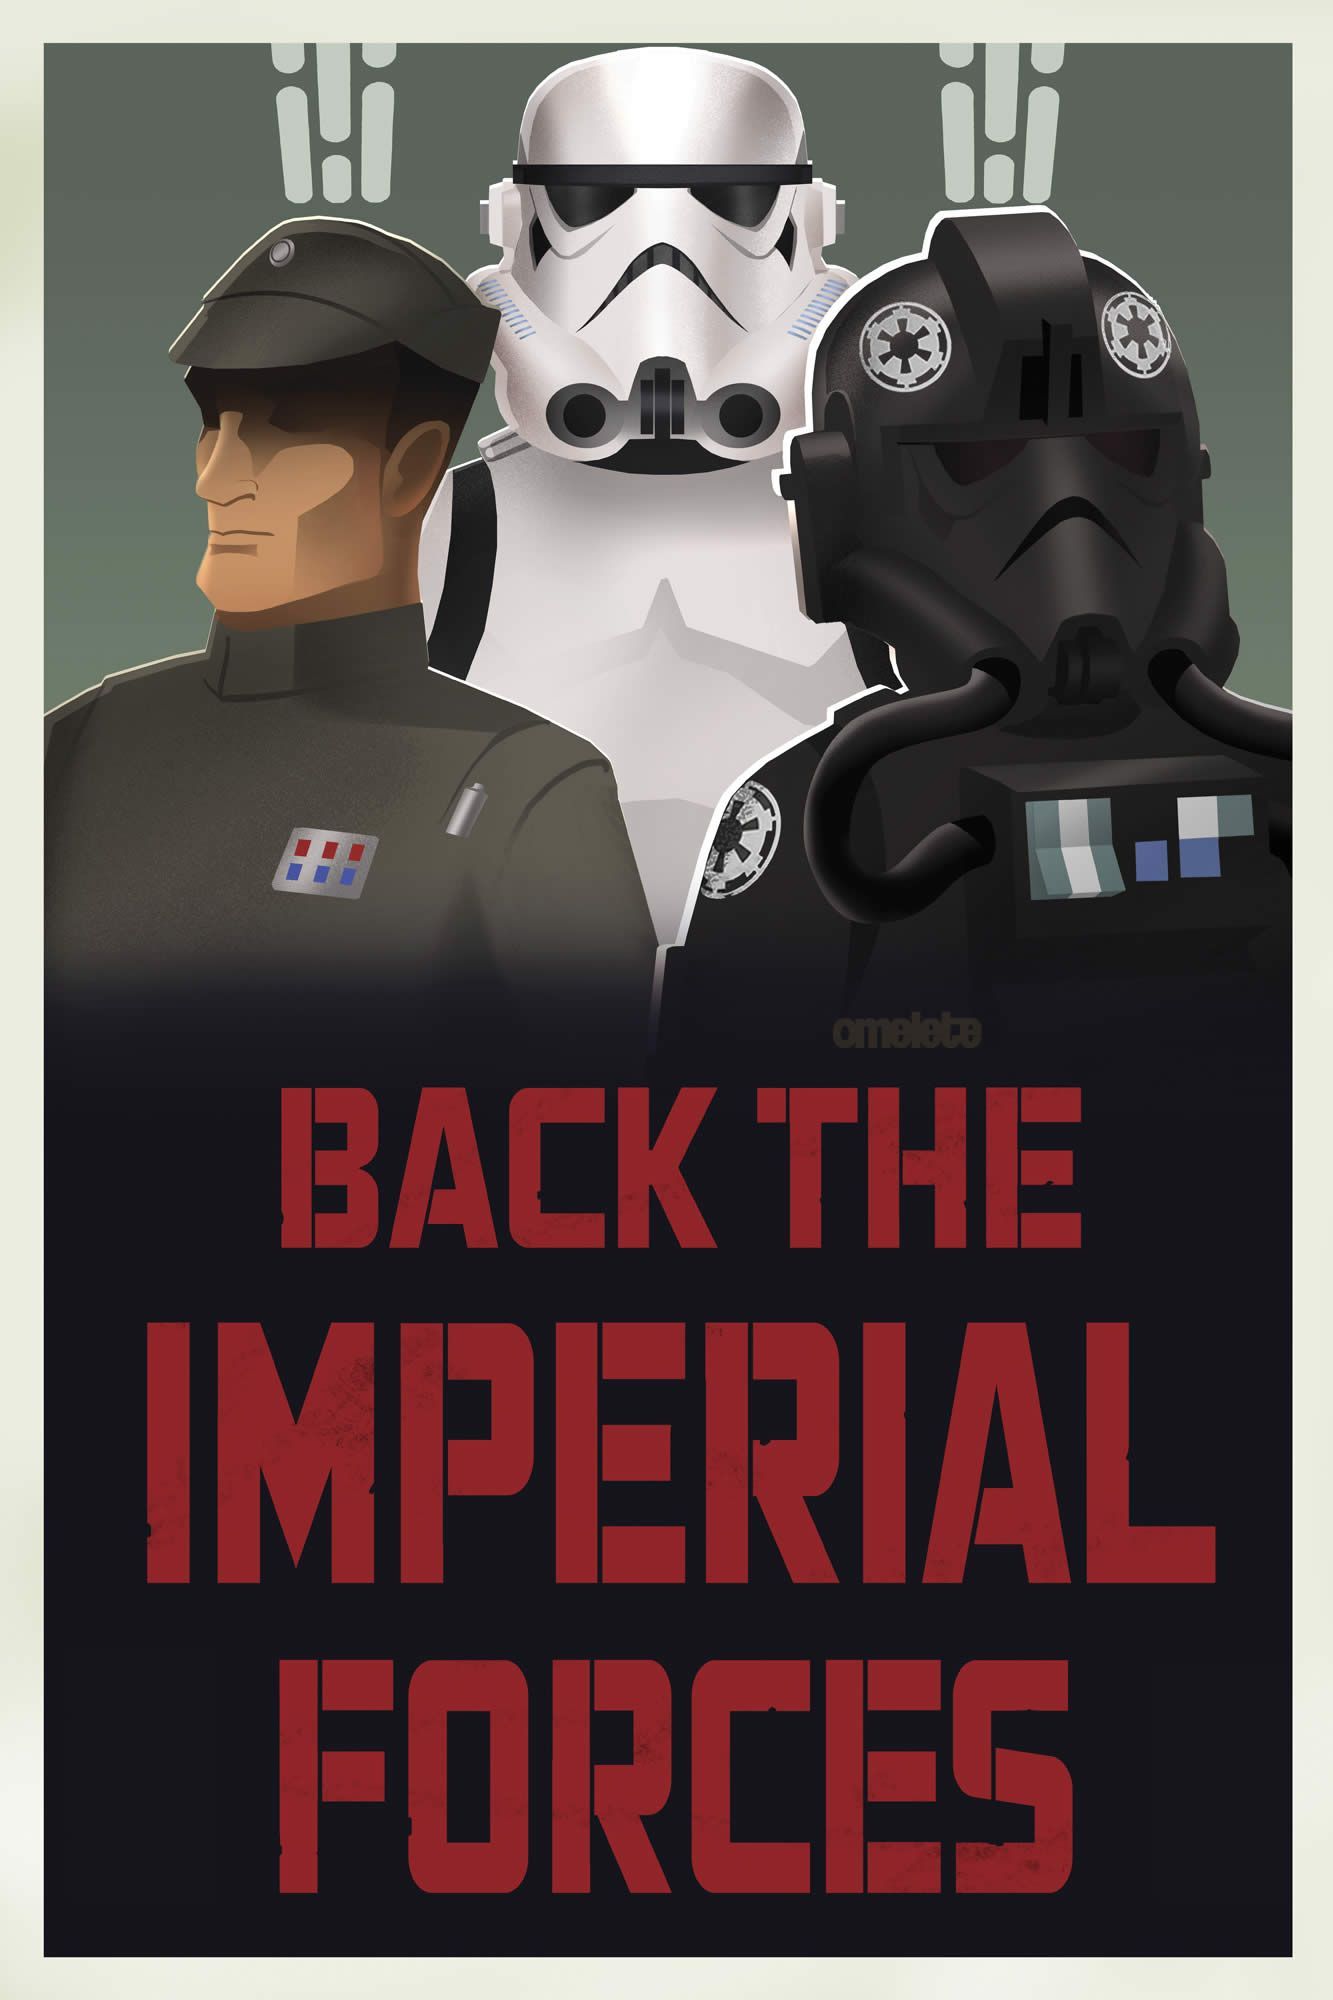 Star Wars Rebels Imperial Propaganda Poster 1